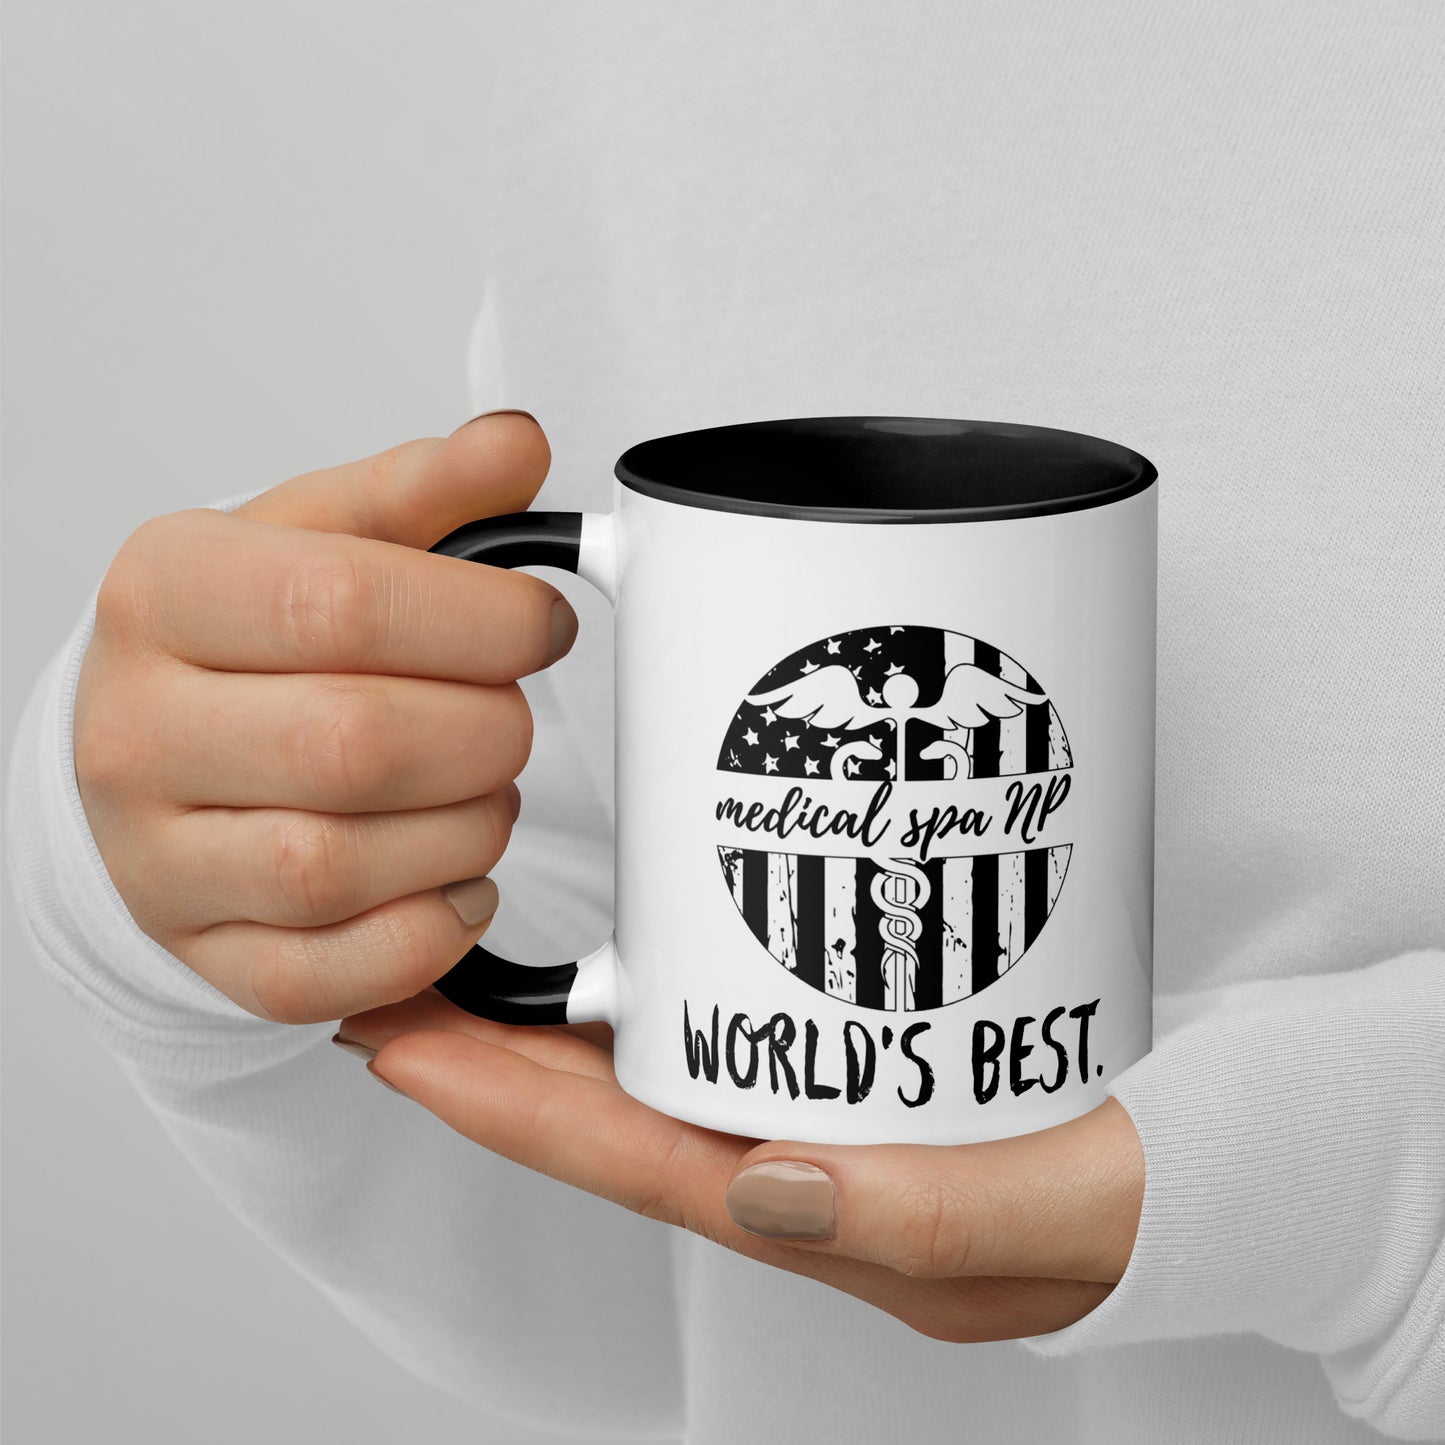 World's Best Mug